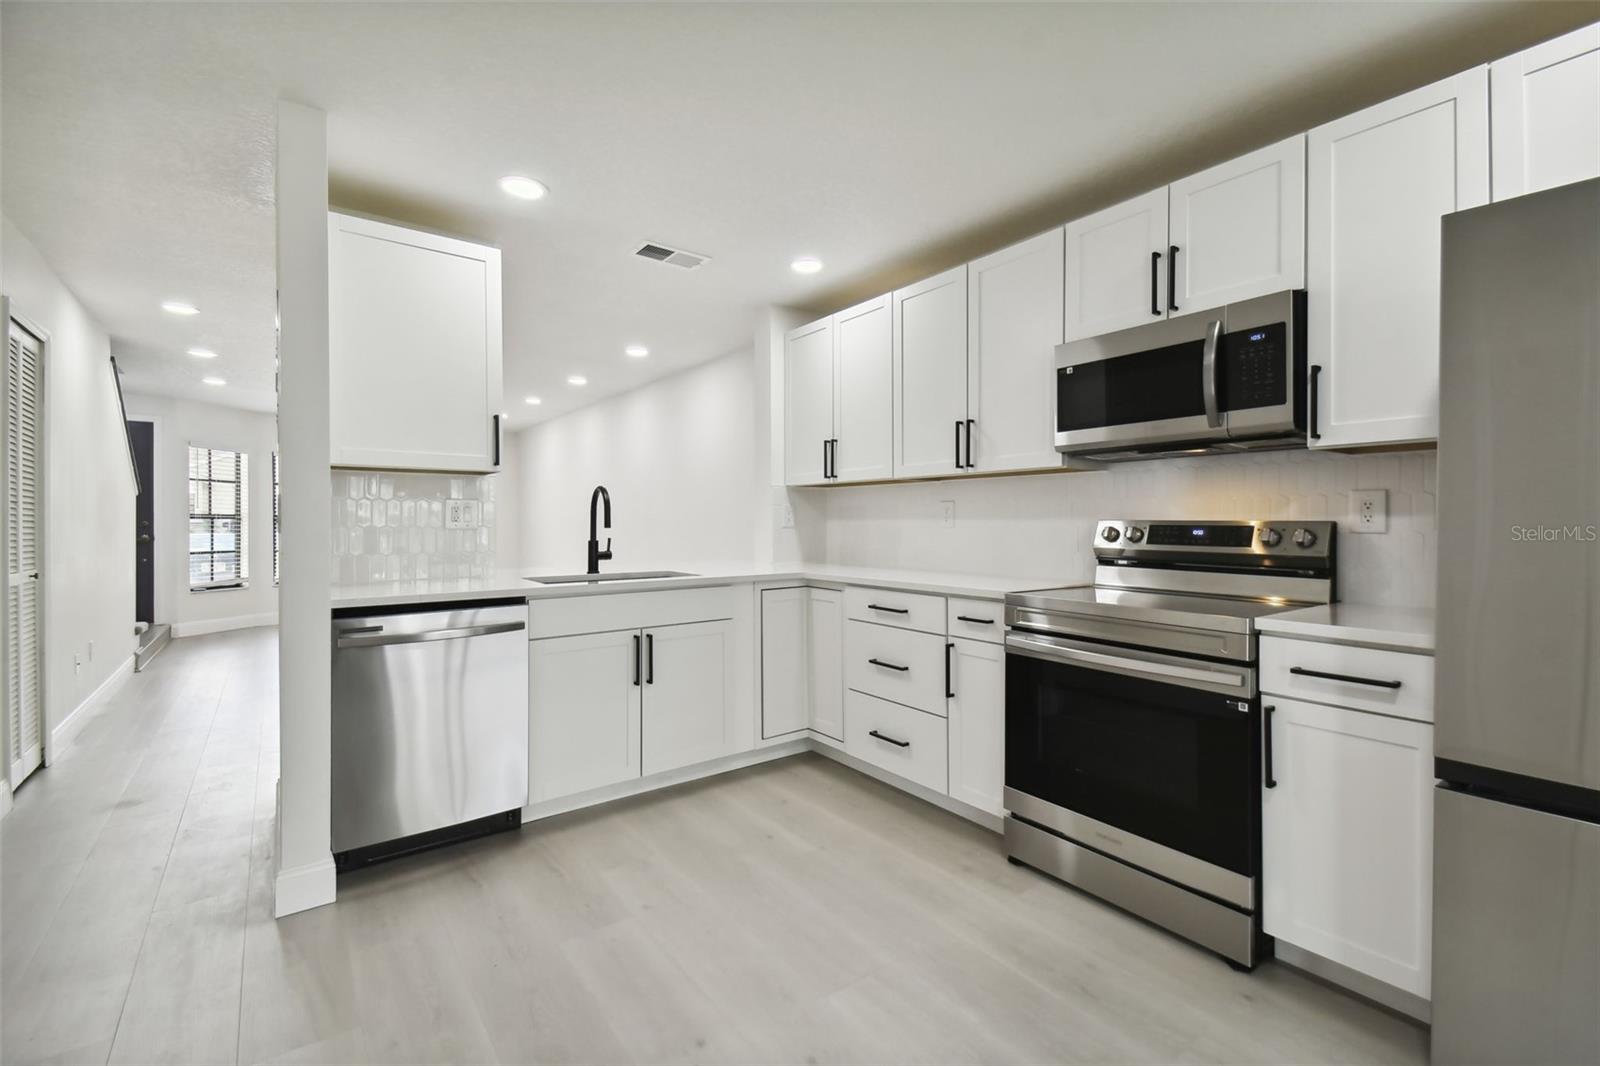 NEW Kitchen Cabinets, Quartz Countertops & Stunning Tile Backsplash!